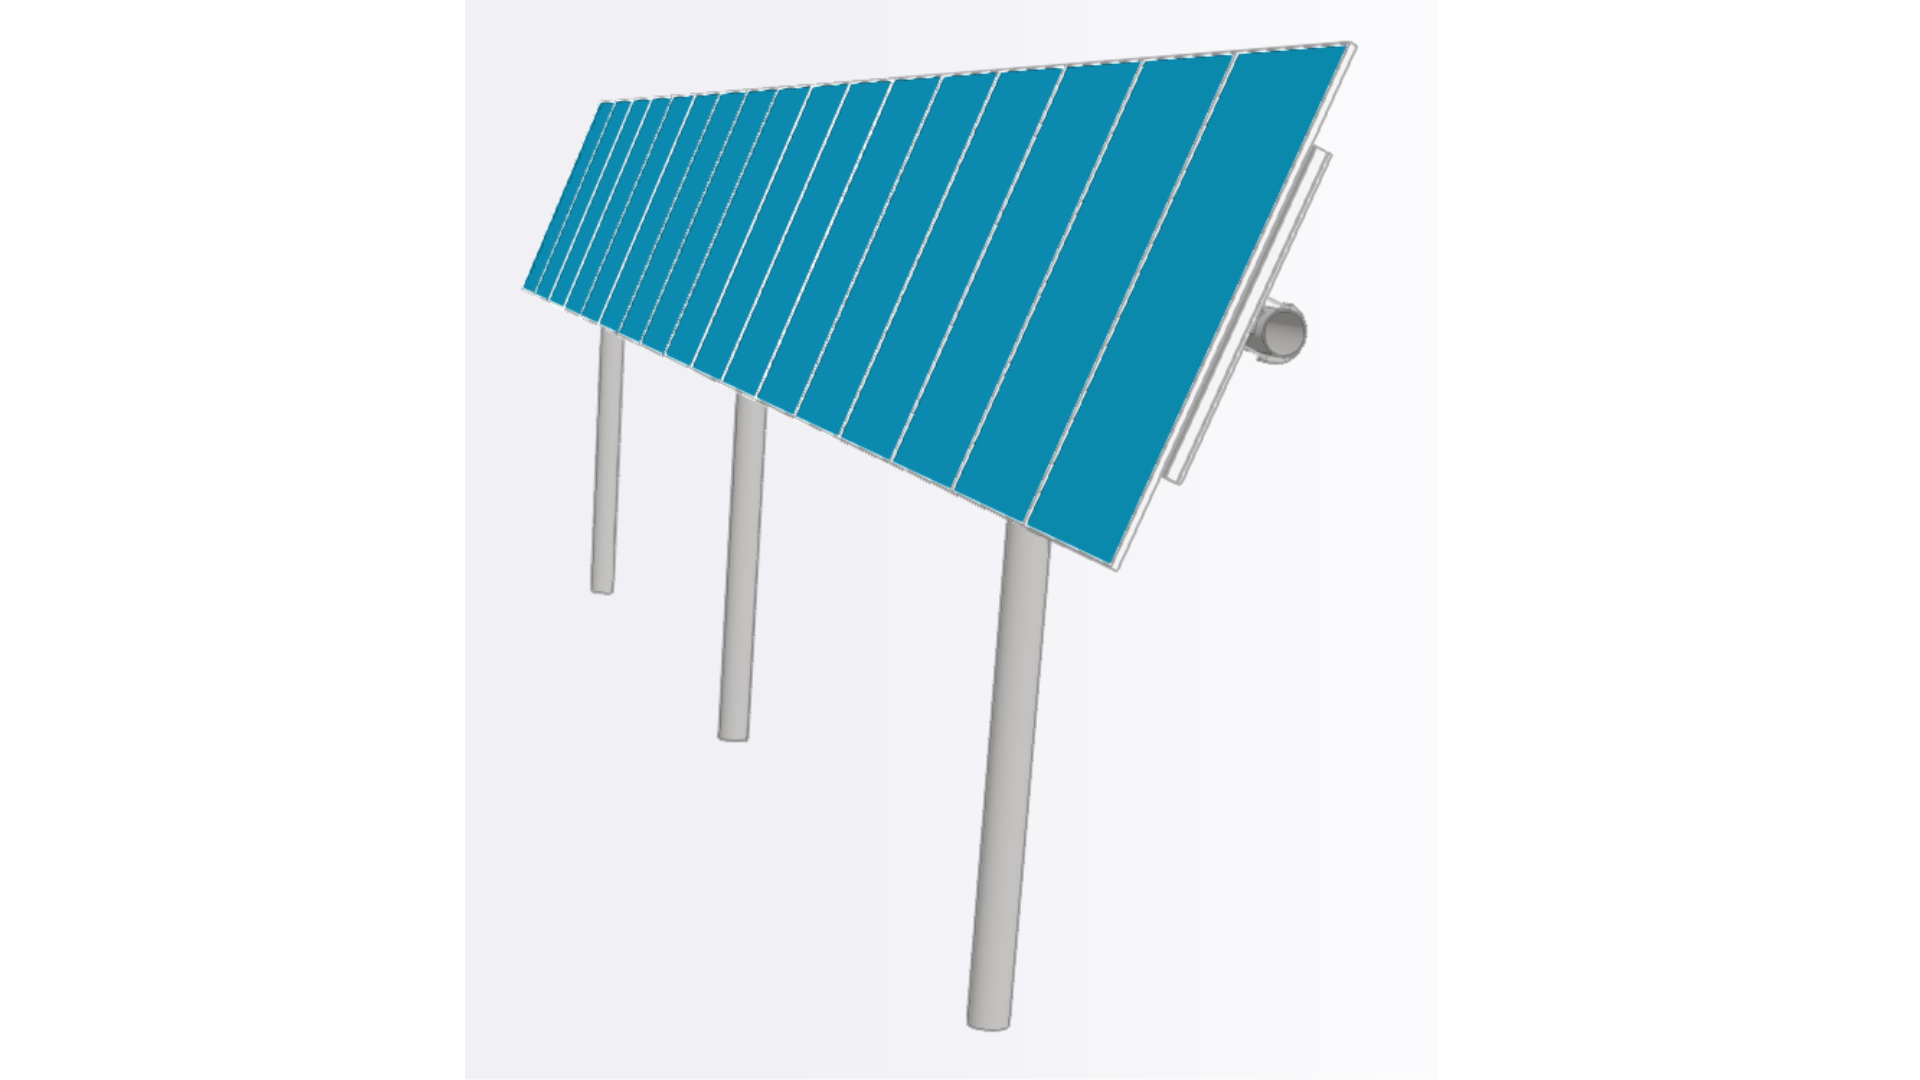 Rotatable solar panel, Voorthuizen 02